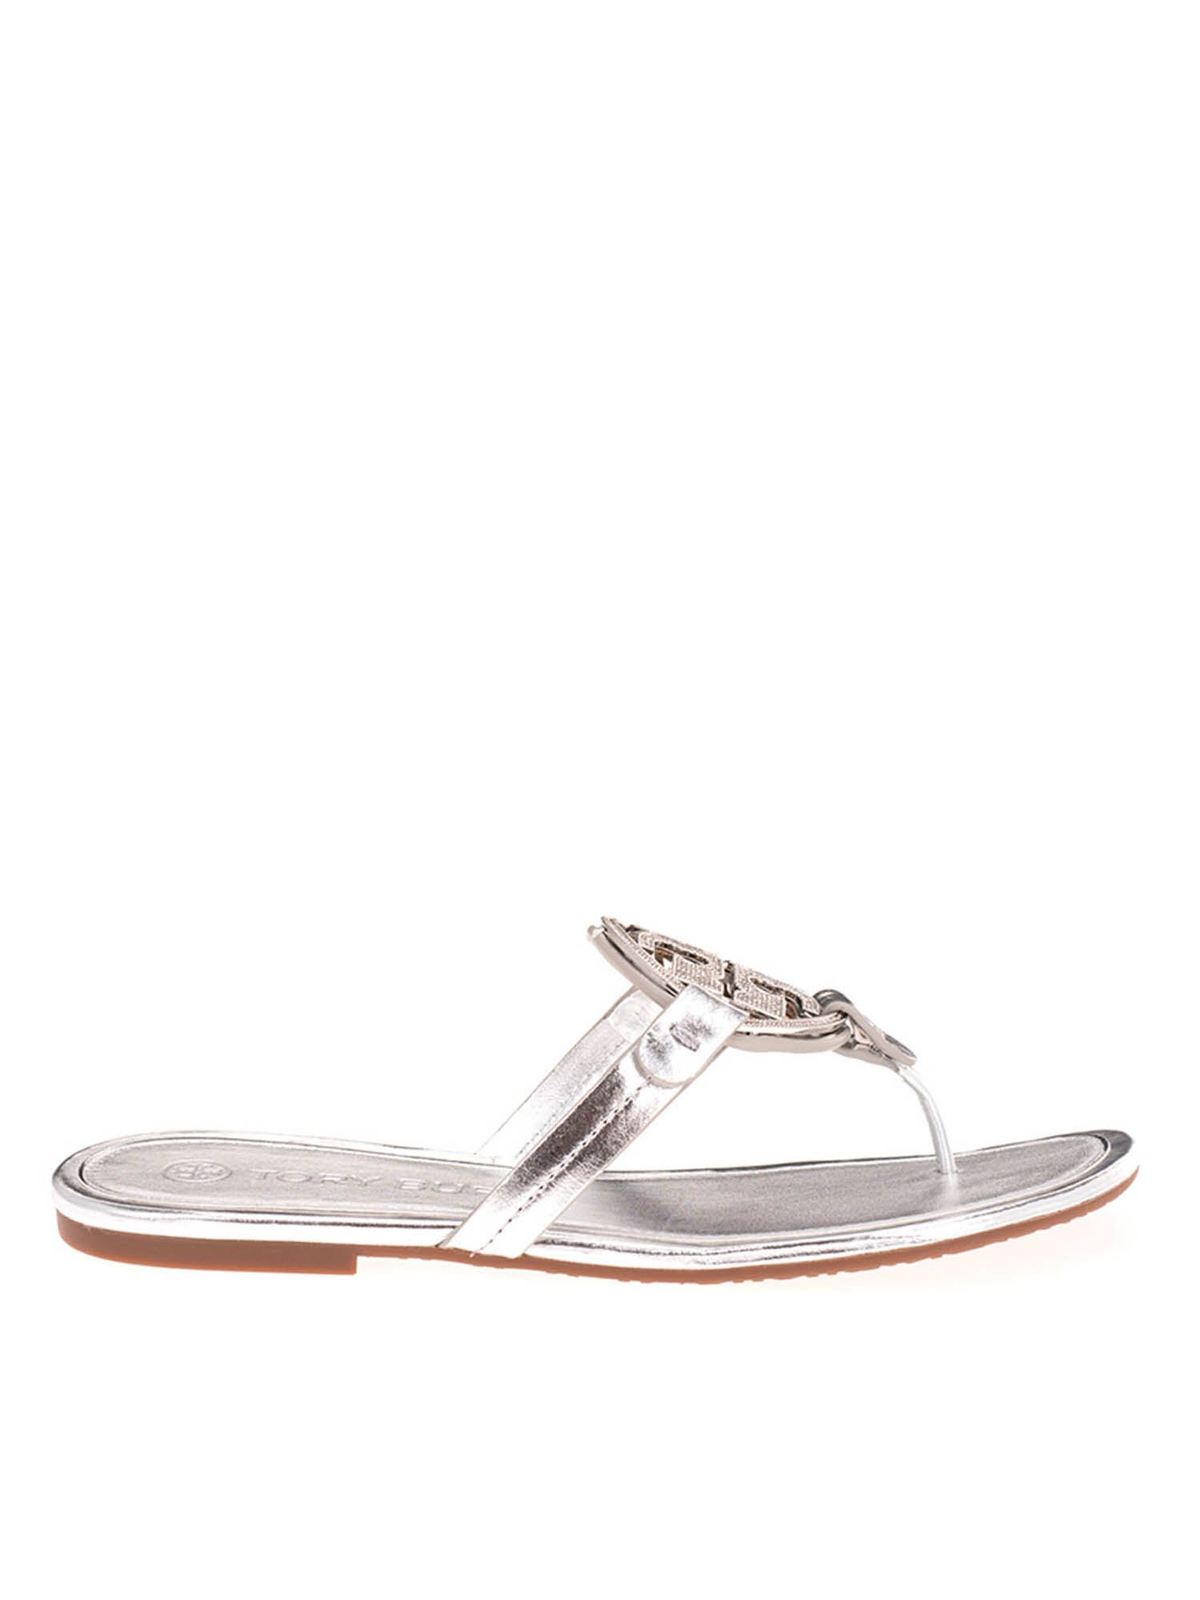 Sandals Tory Burch - Silver tone jewel sandals - 79209040 